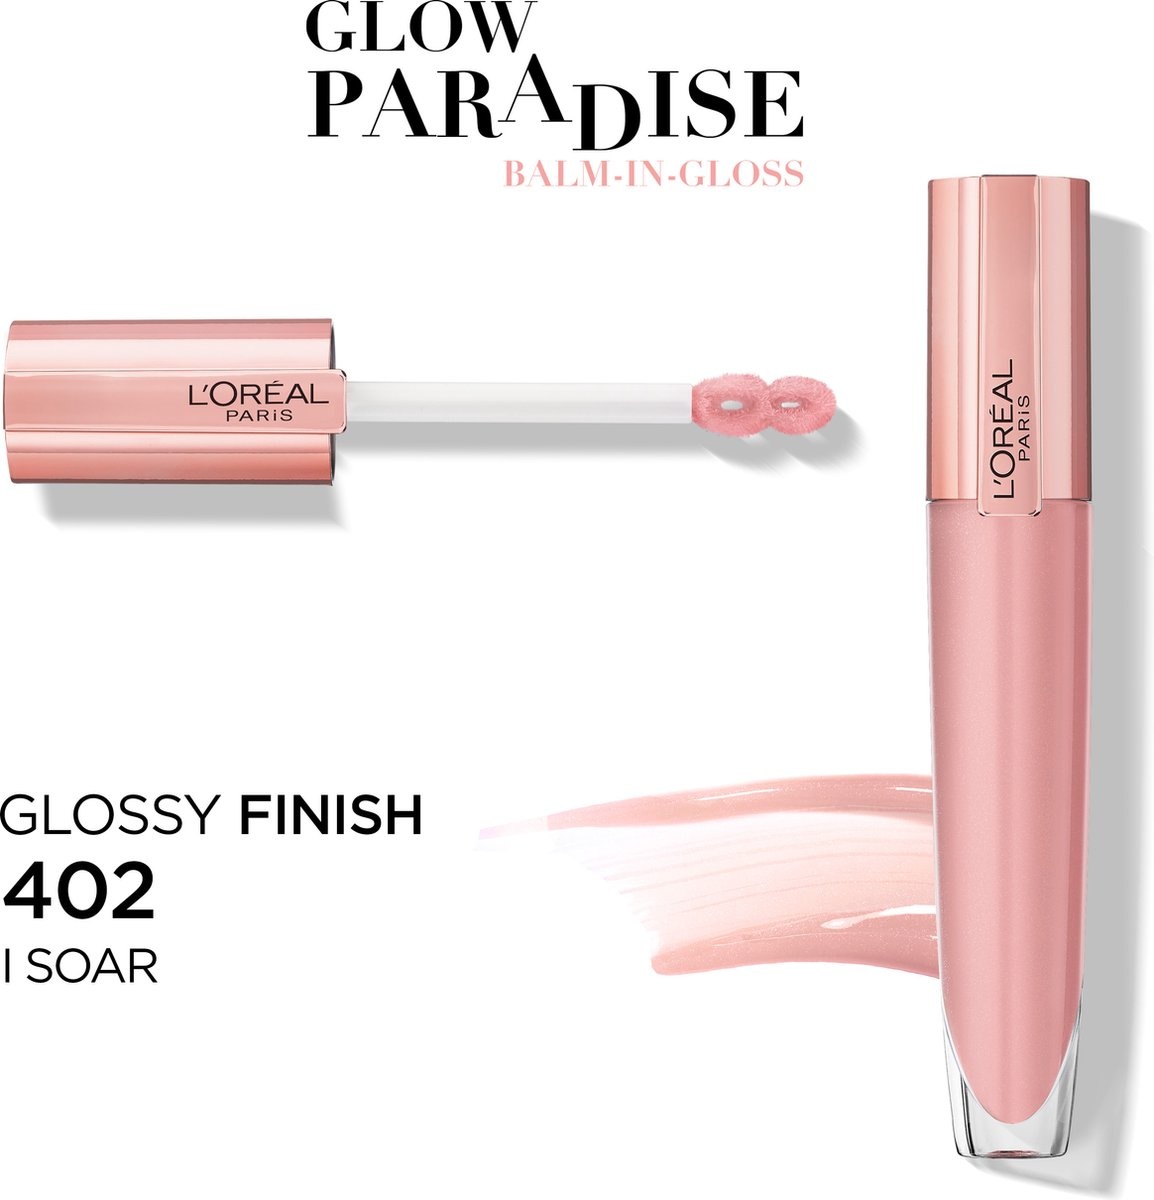 L'Oréal Paris Glow Paradise Balm in Gloss - 402 I Soar - Transparent Pink